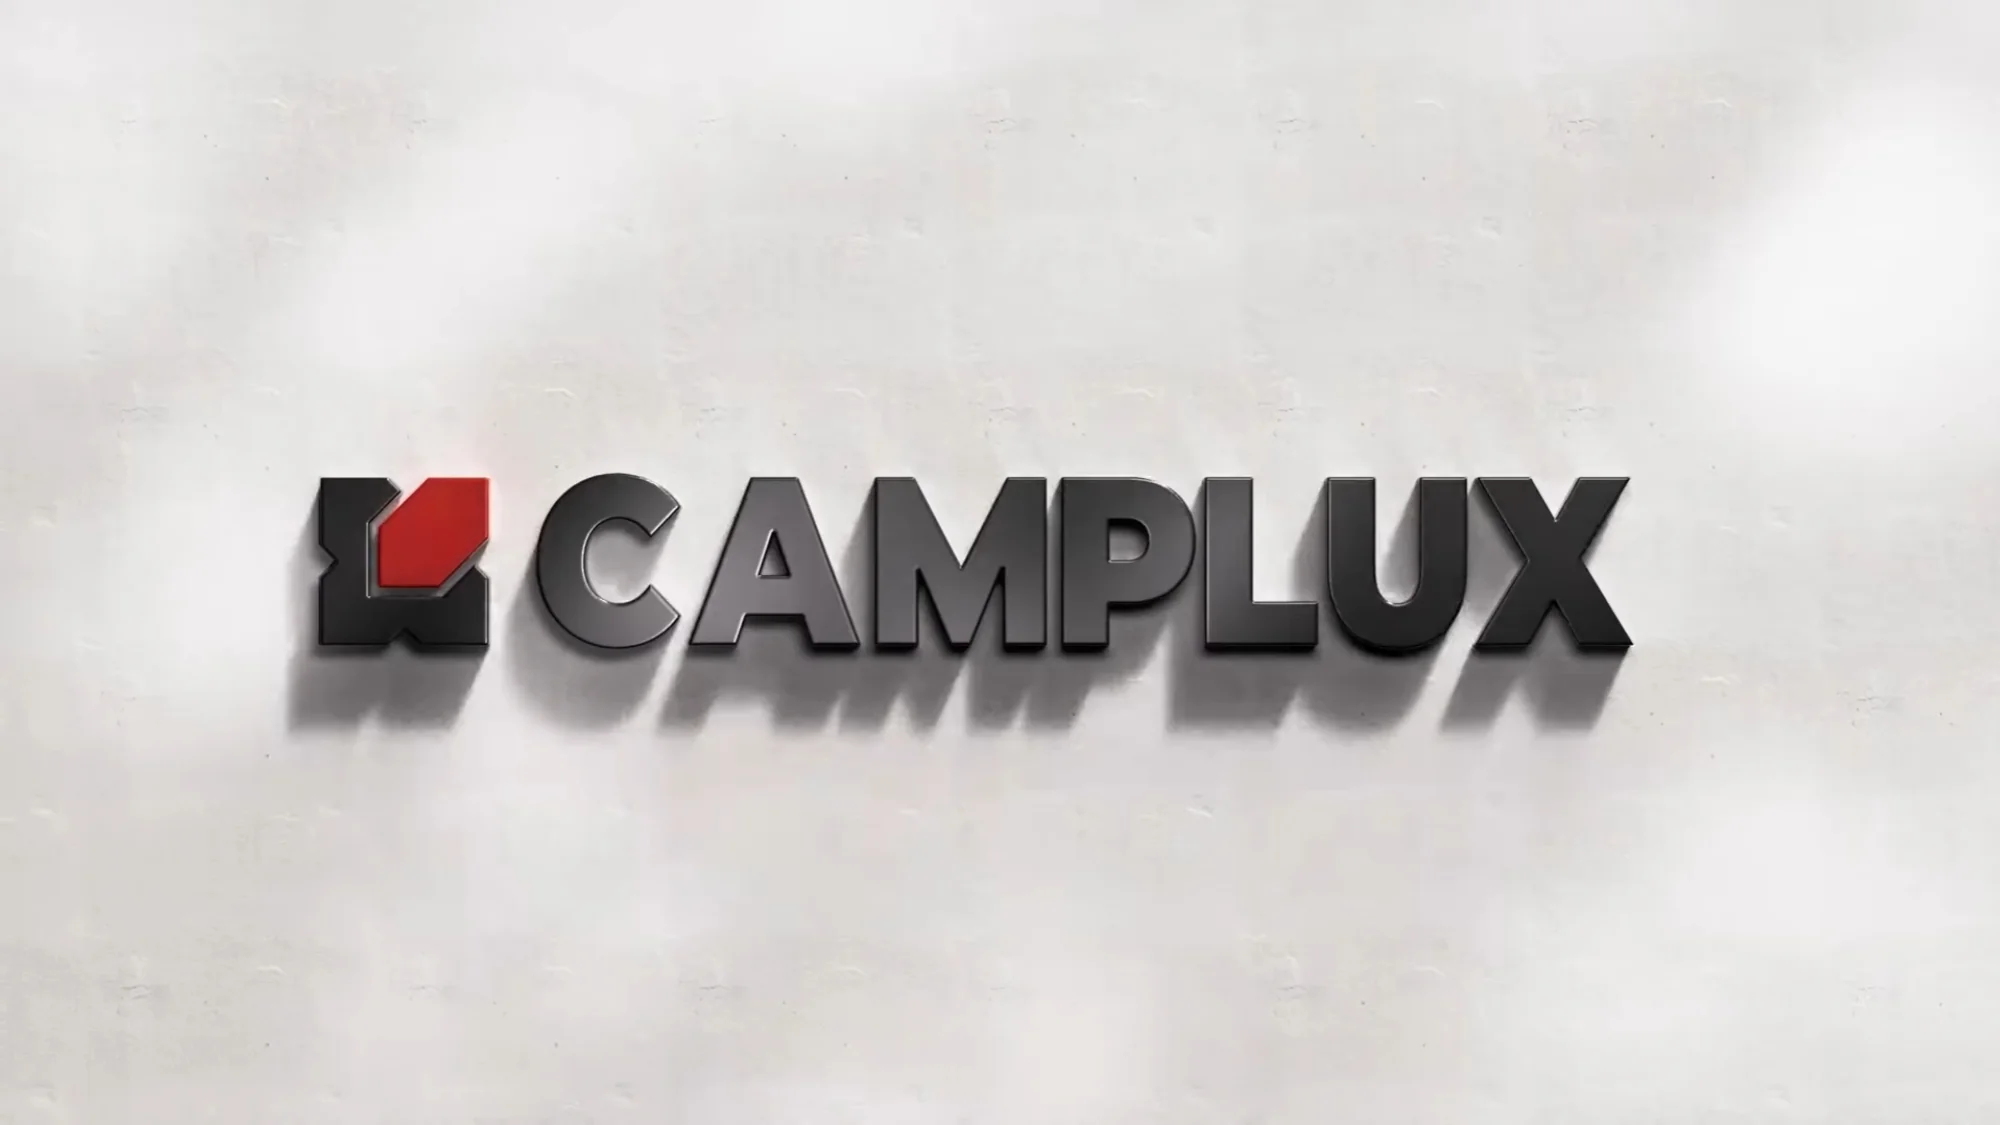 Camplux